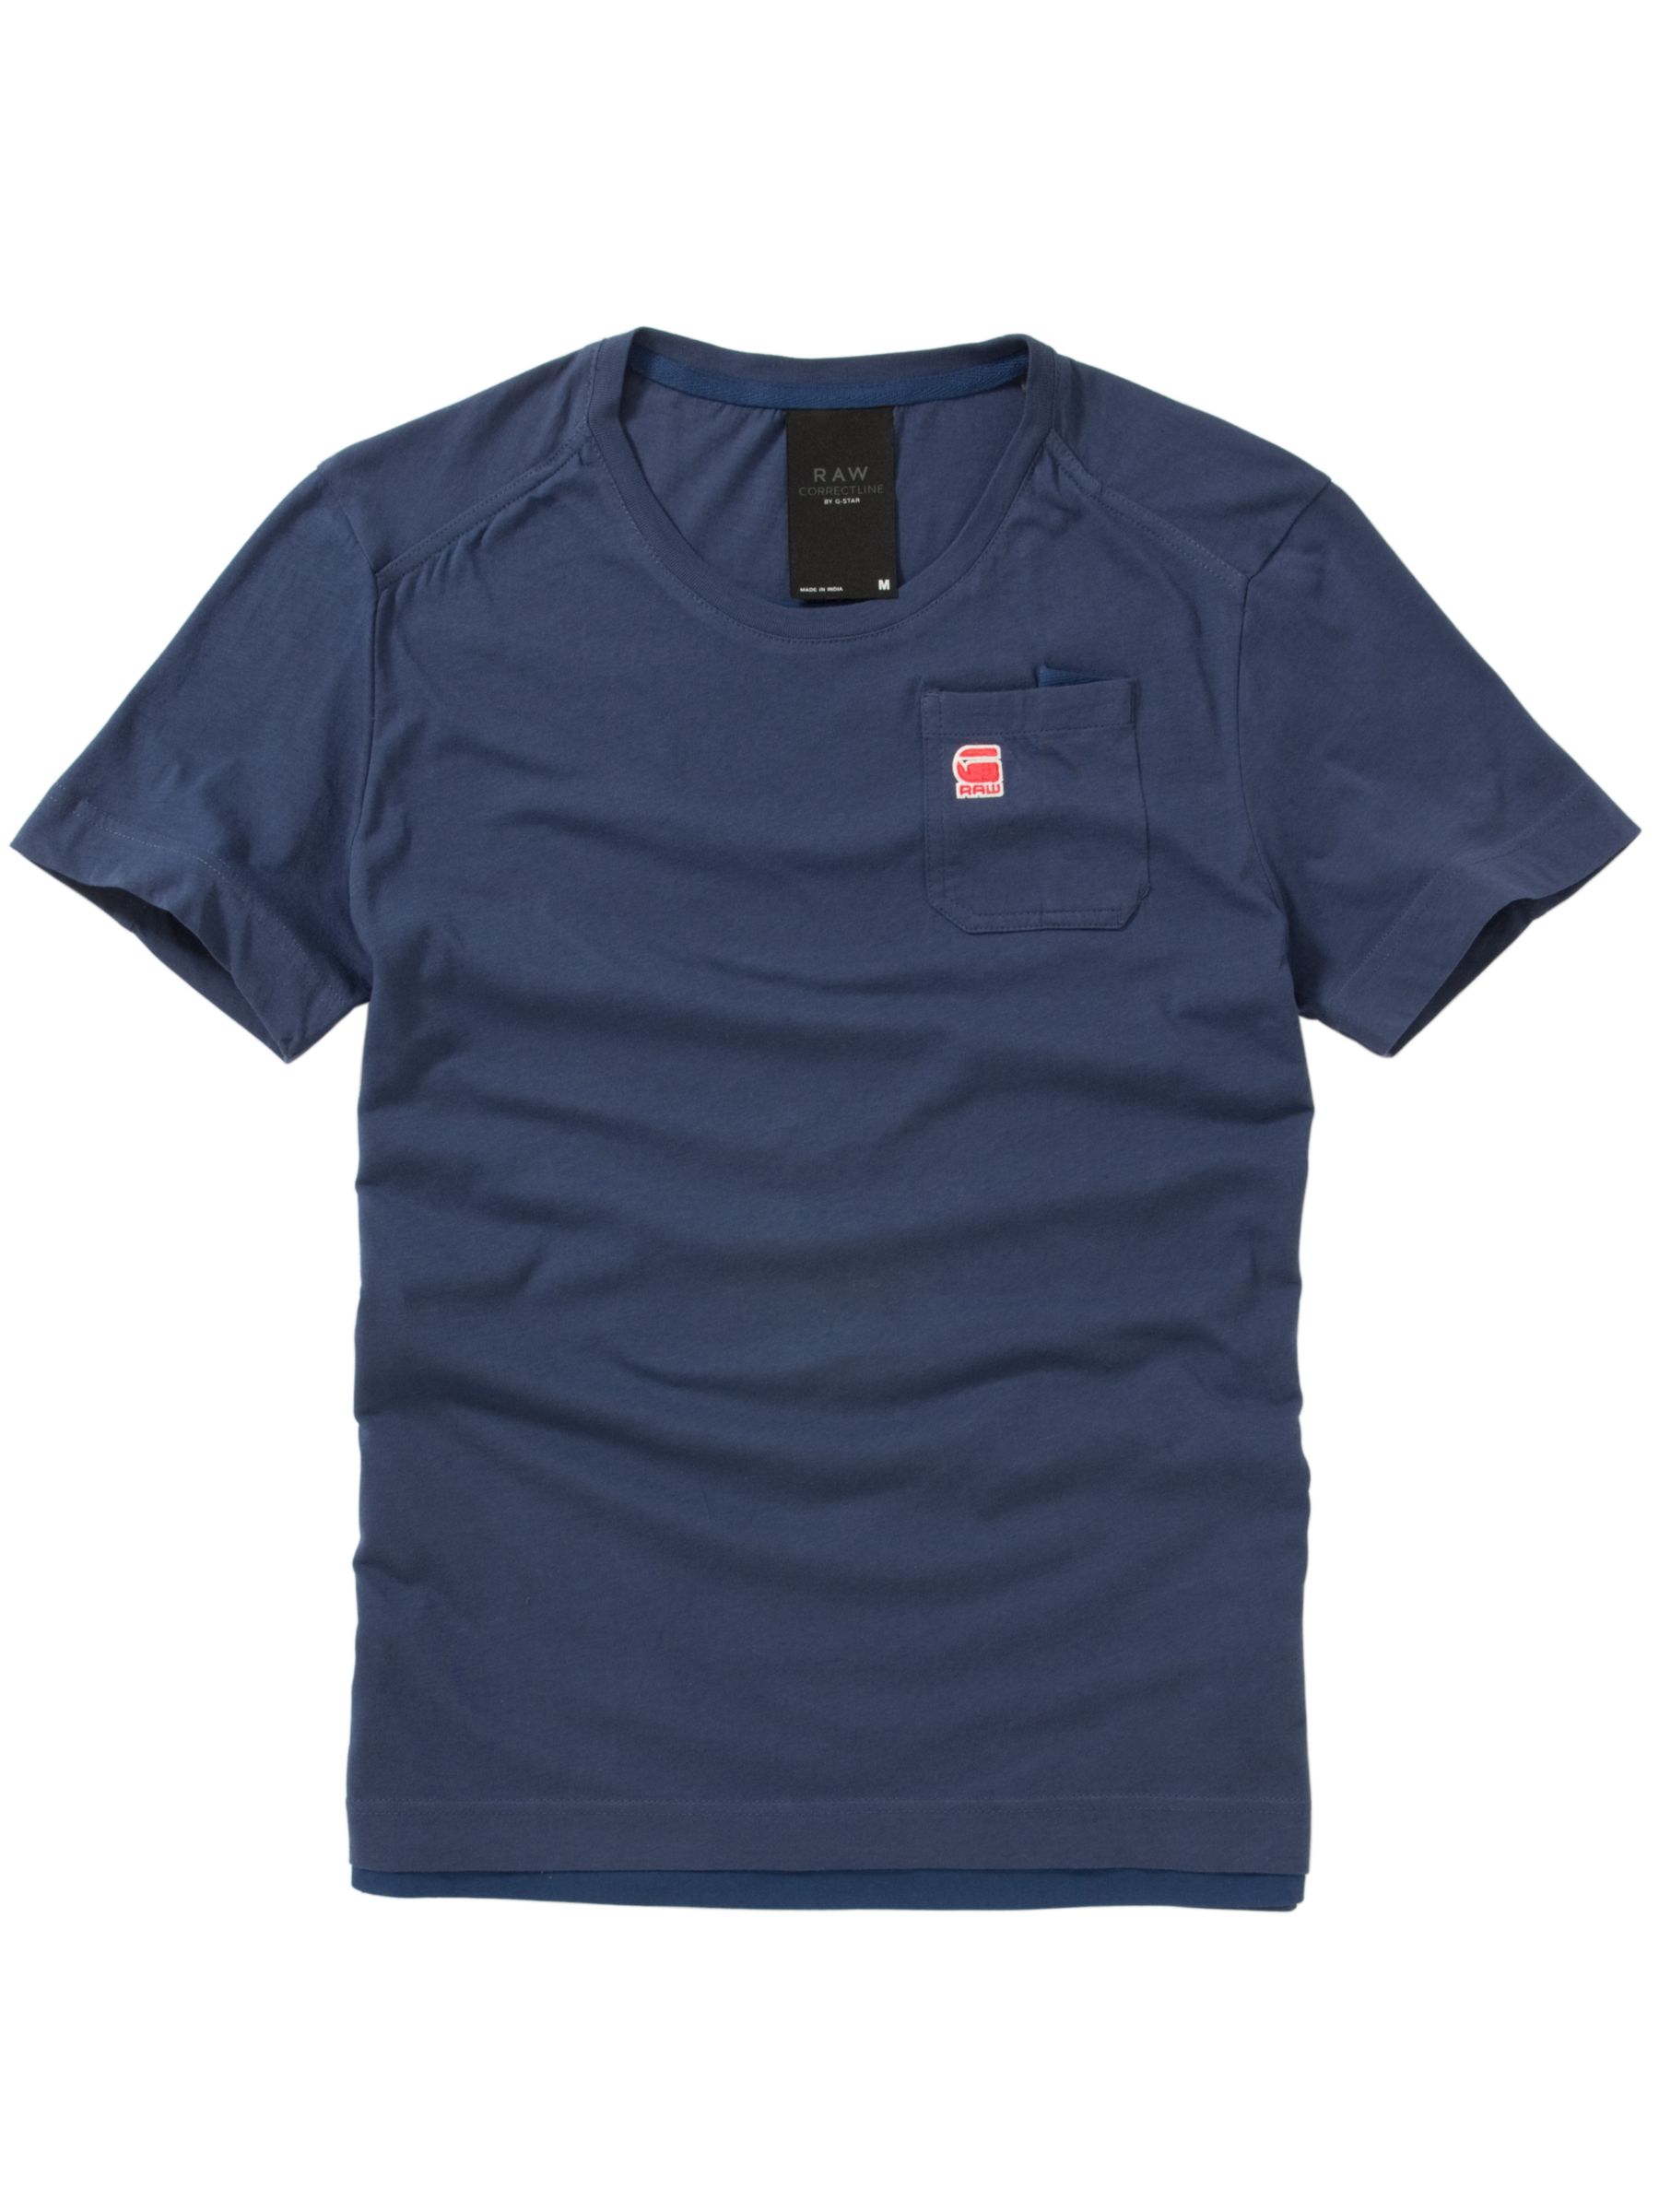 G-Star Raw Harold Crew Neck T-Shirt, Riviera Blue